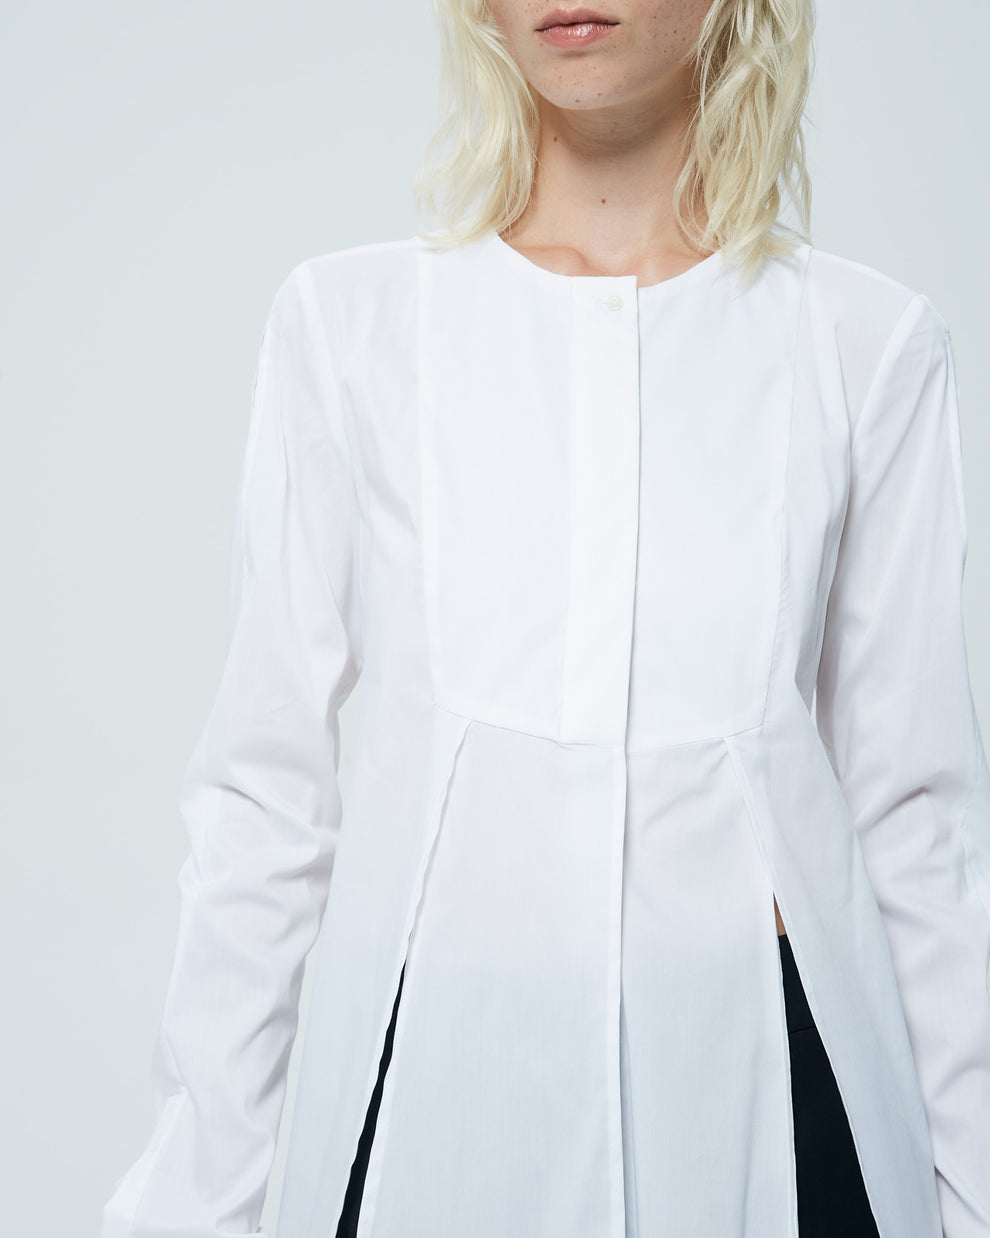 Shirt dress with slits white